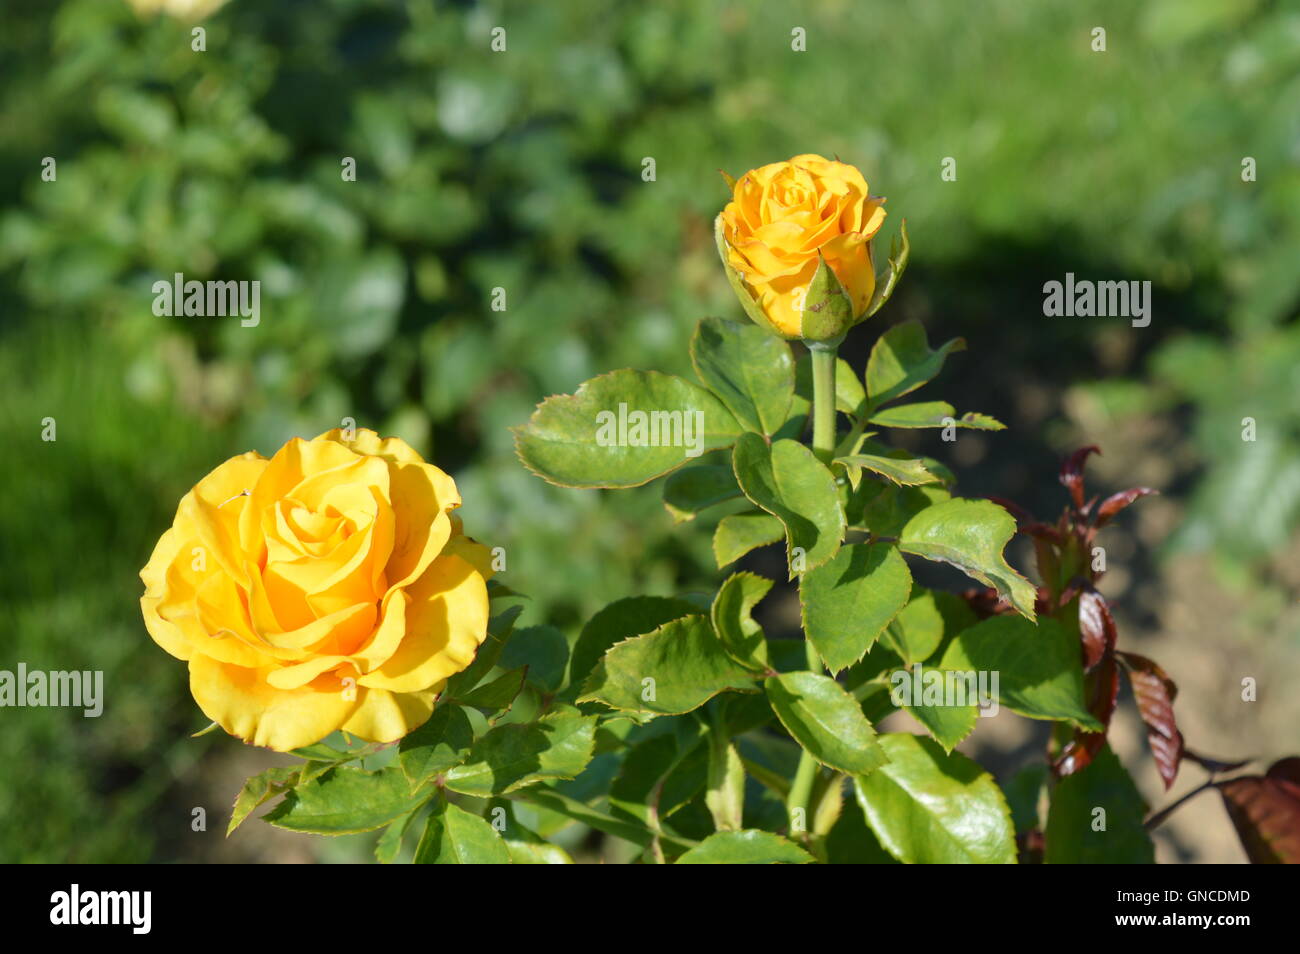 Hybrid Tea, Large-Flowered Rose 'Glorius' Stock Photo